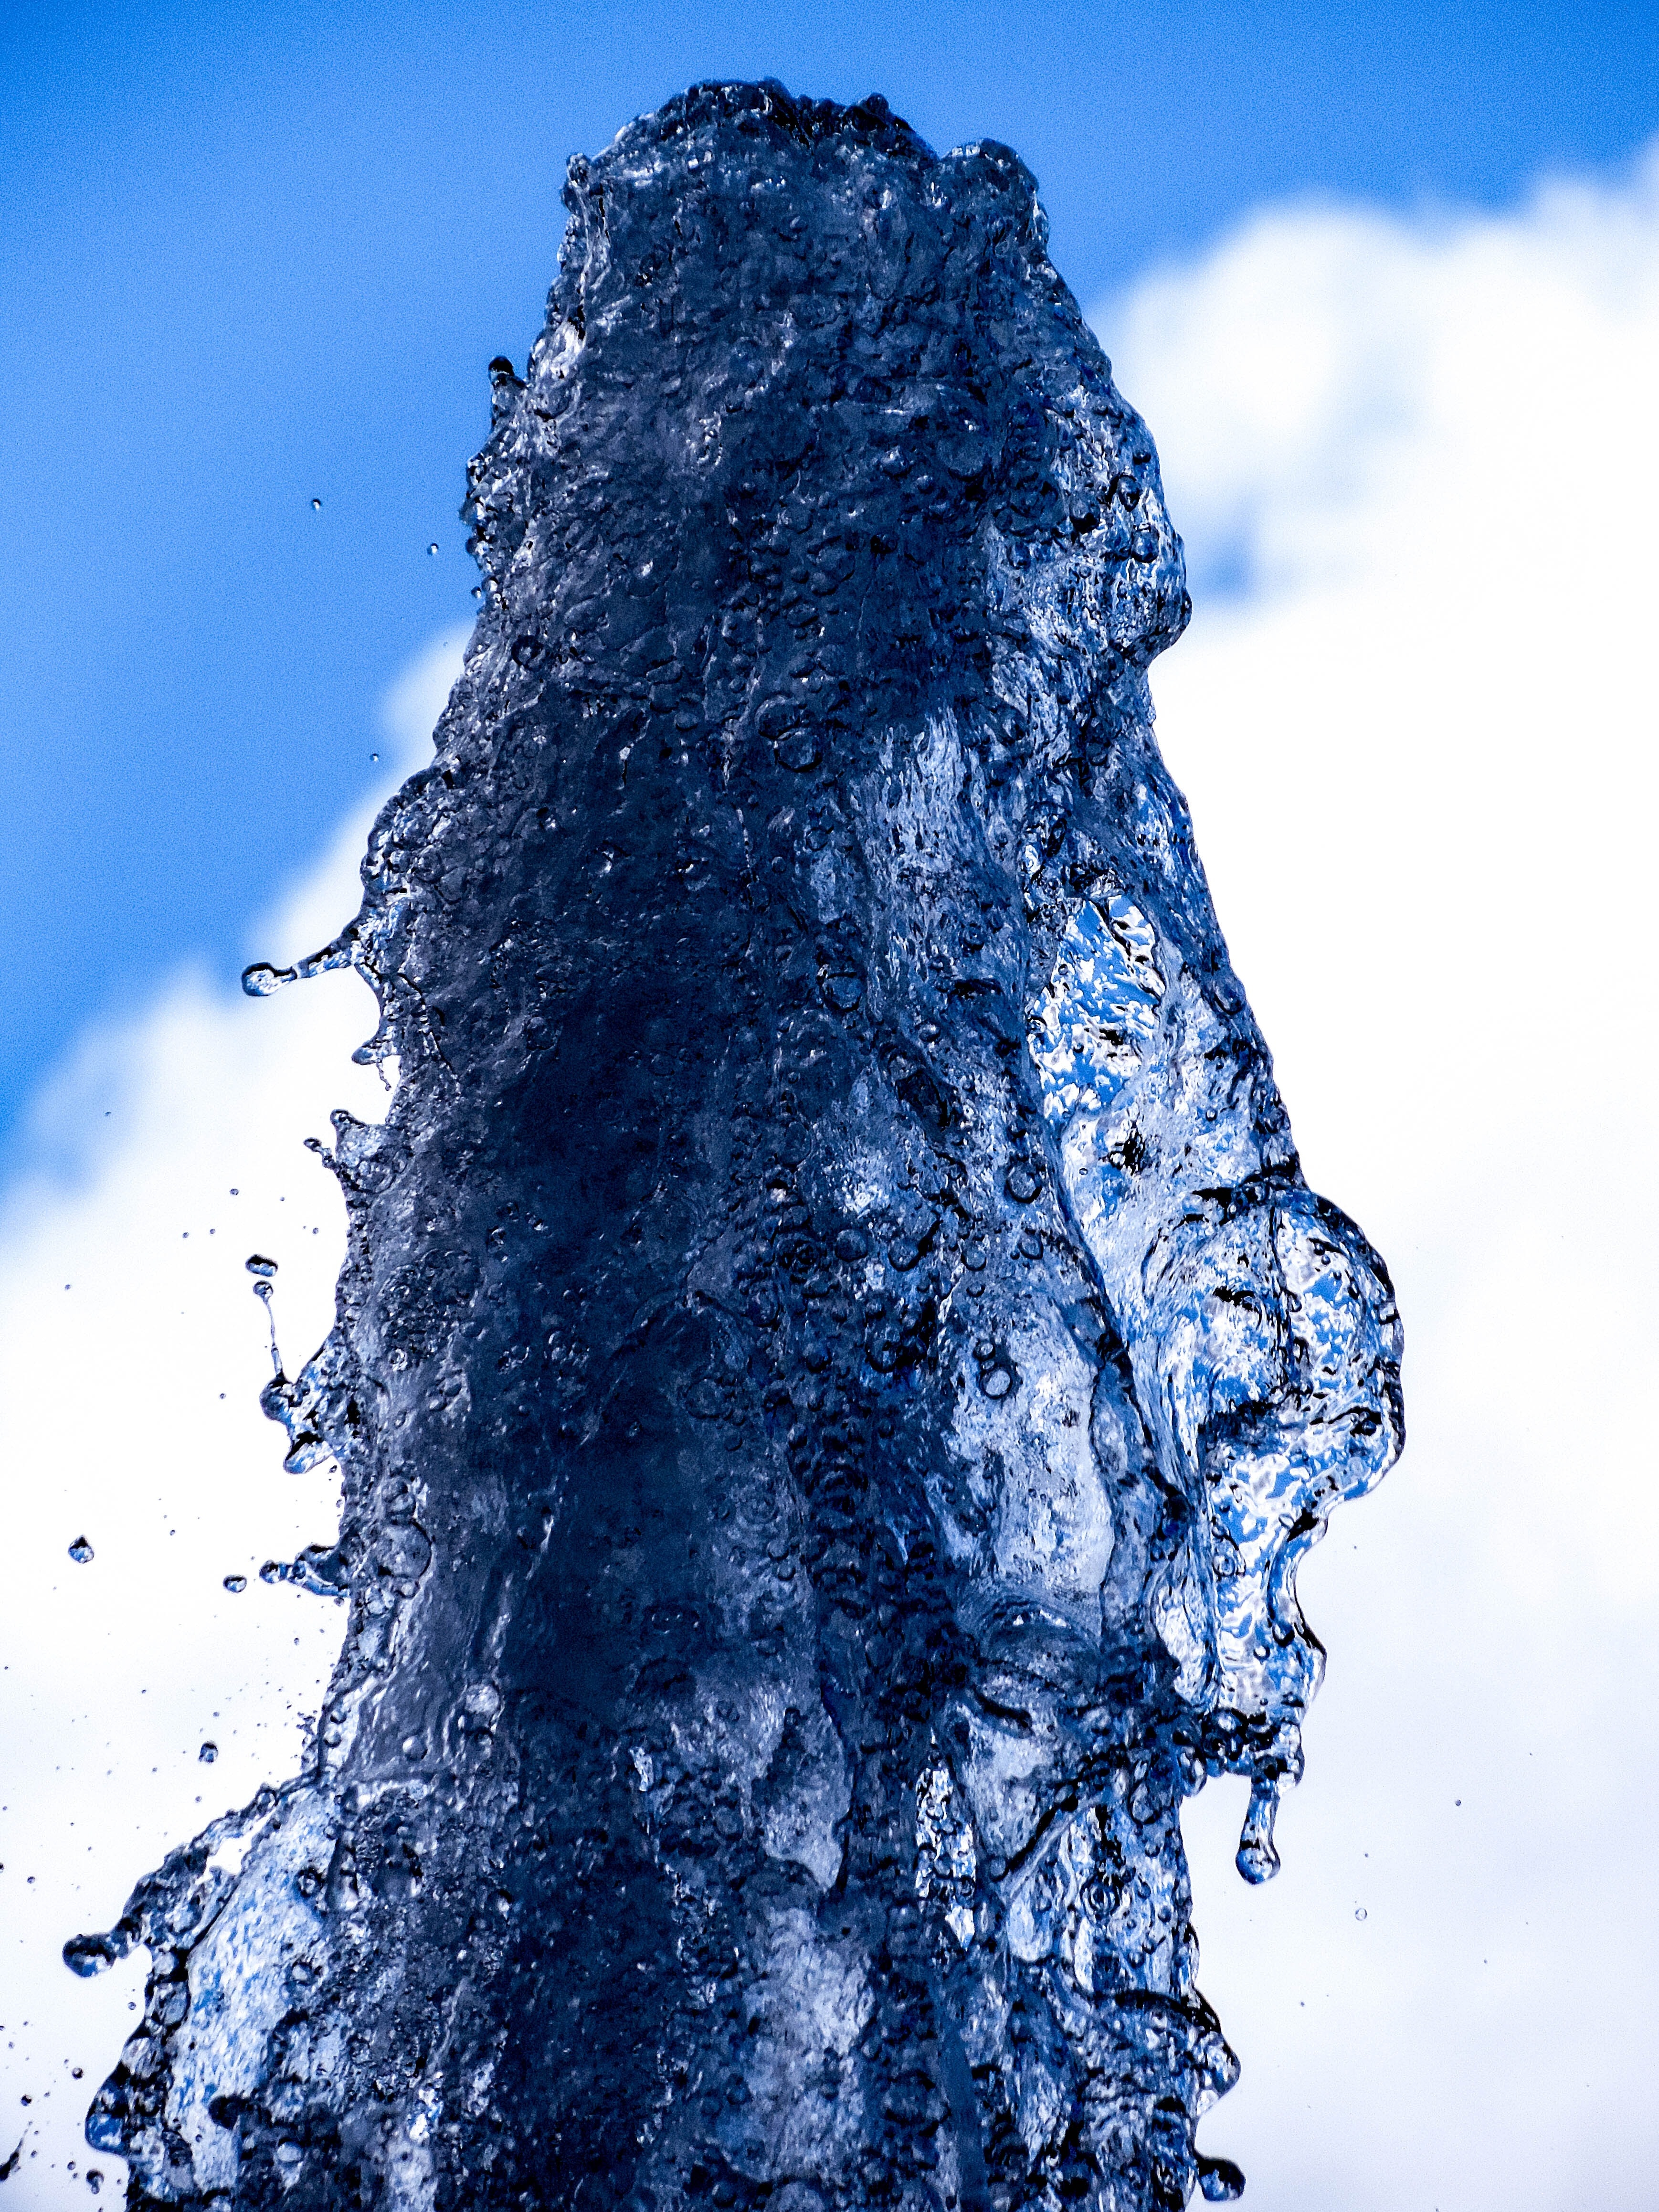 close up photograph of bursting water